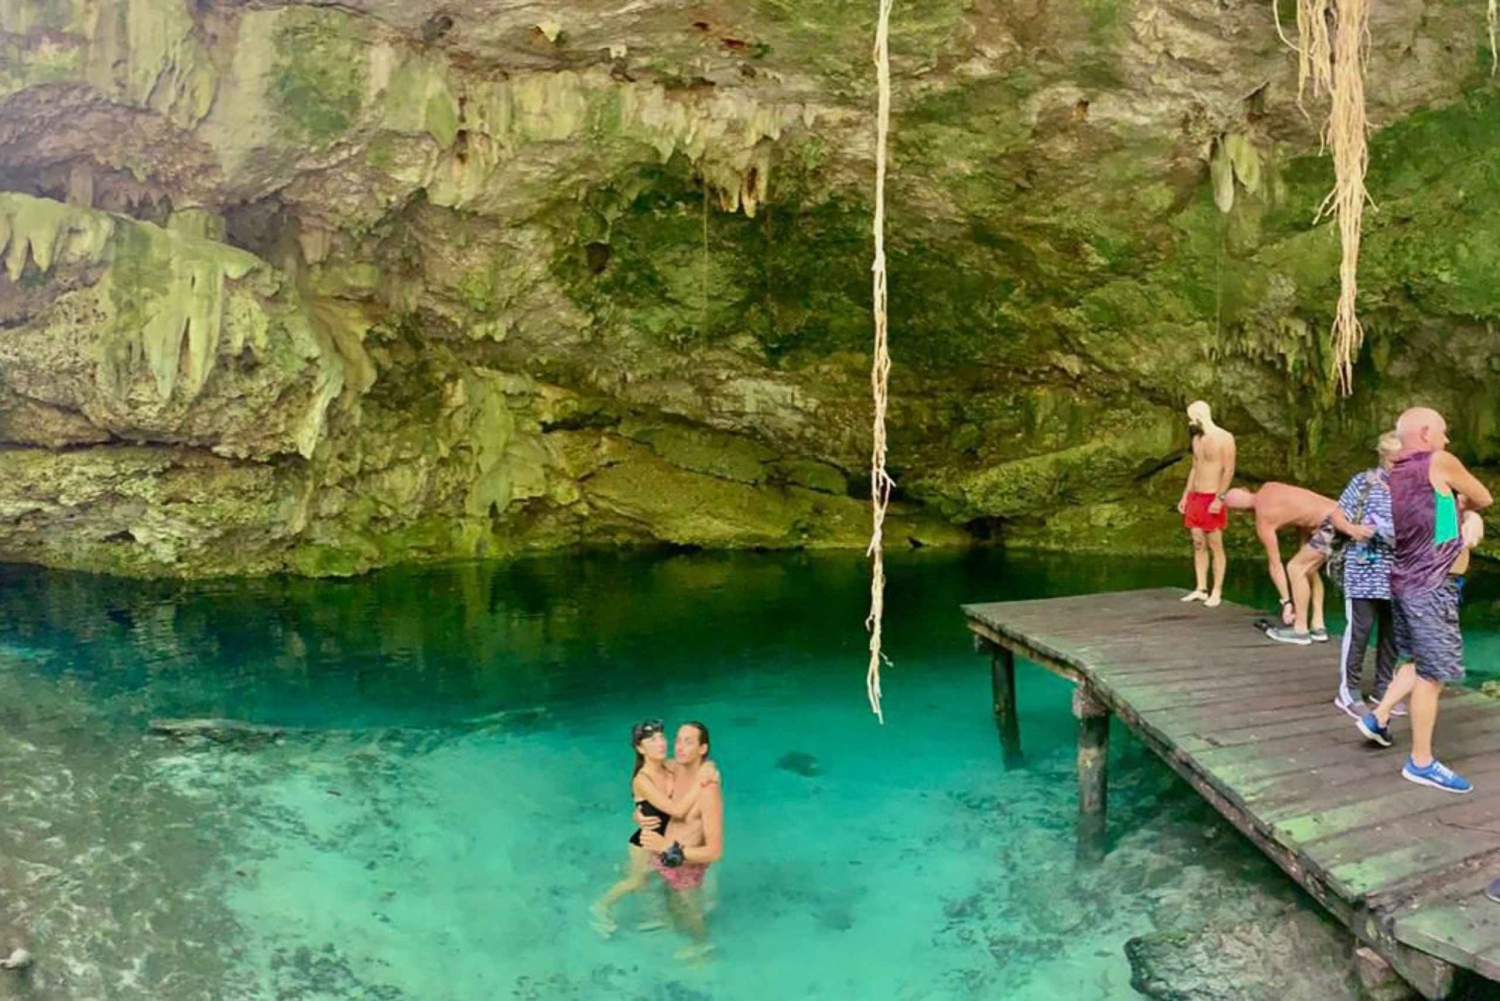 Playa Del Carmen: Cenote & Mayan Village Tour by Buggy